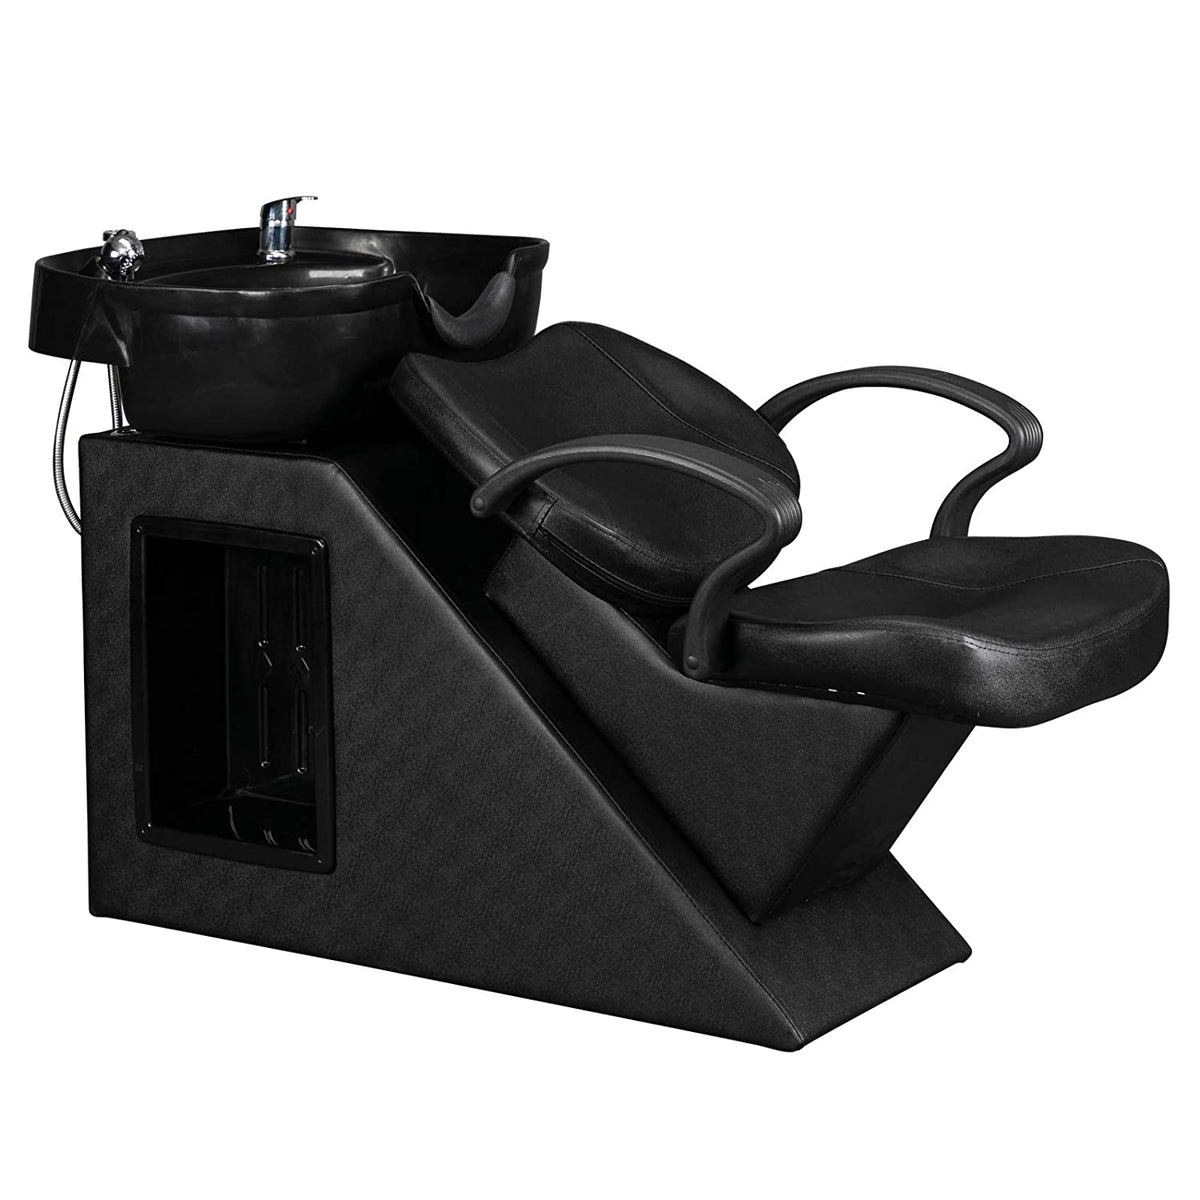 OmySalon Barber Backwash Chair Spa Salon Equipment ABS Plastic Shampoo Bowl Sink Unit Station